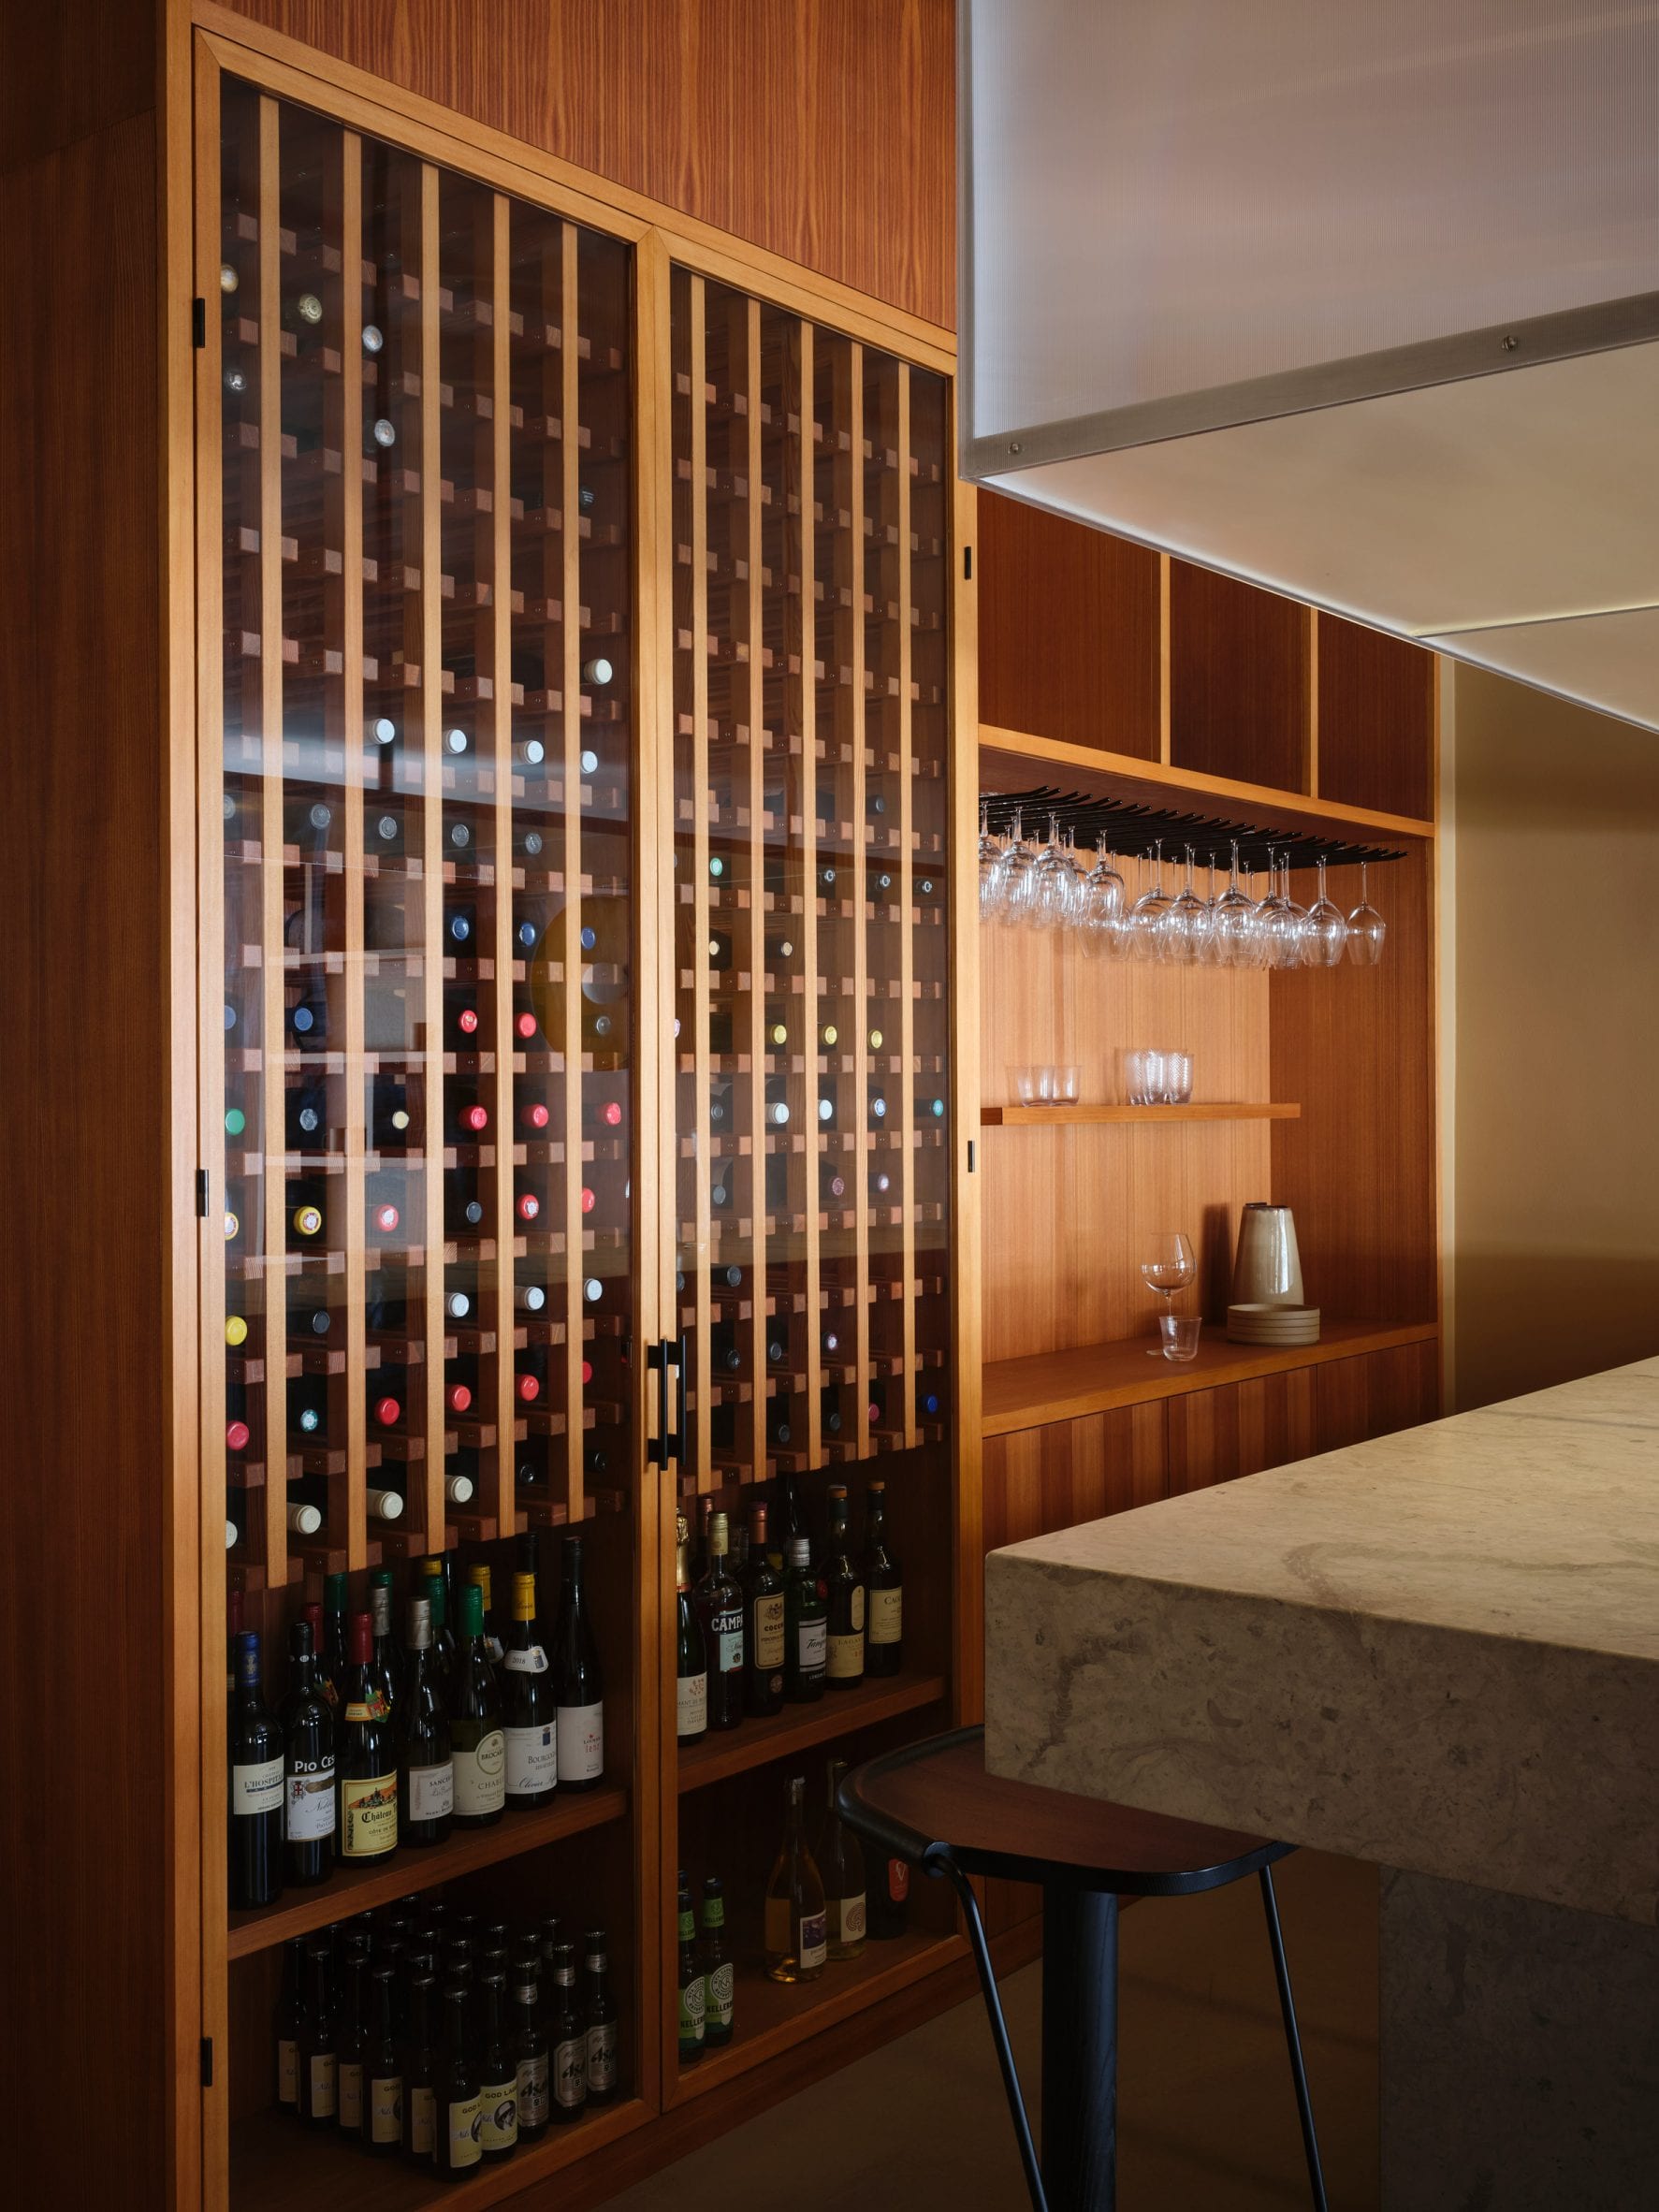 Samsen atelier has large wine storage